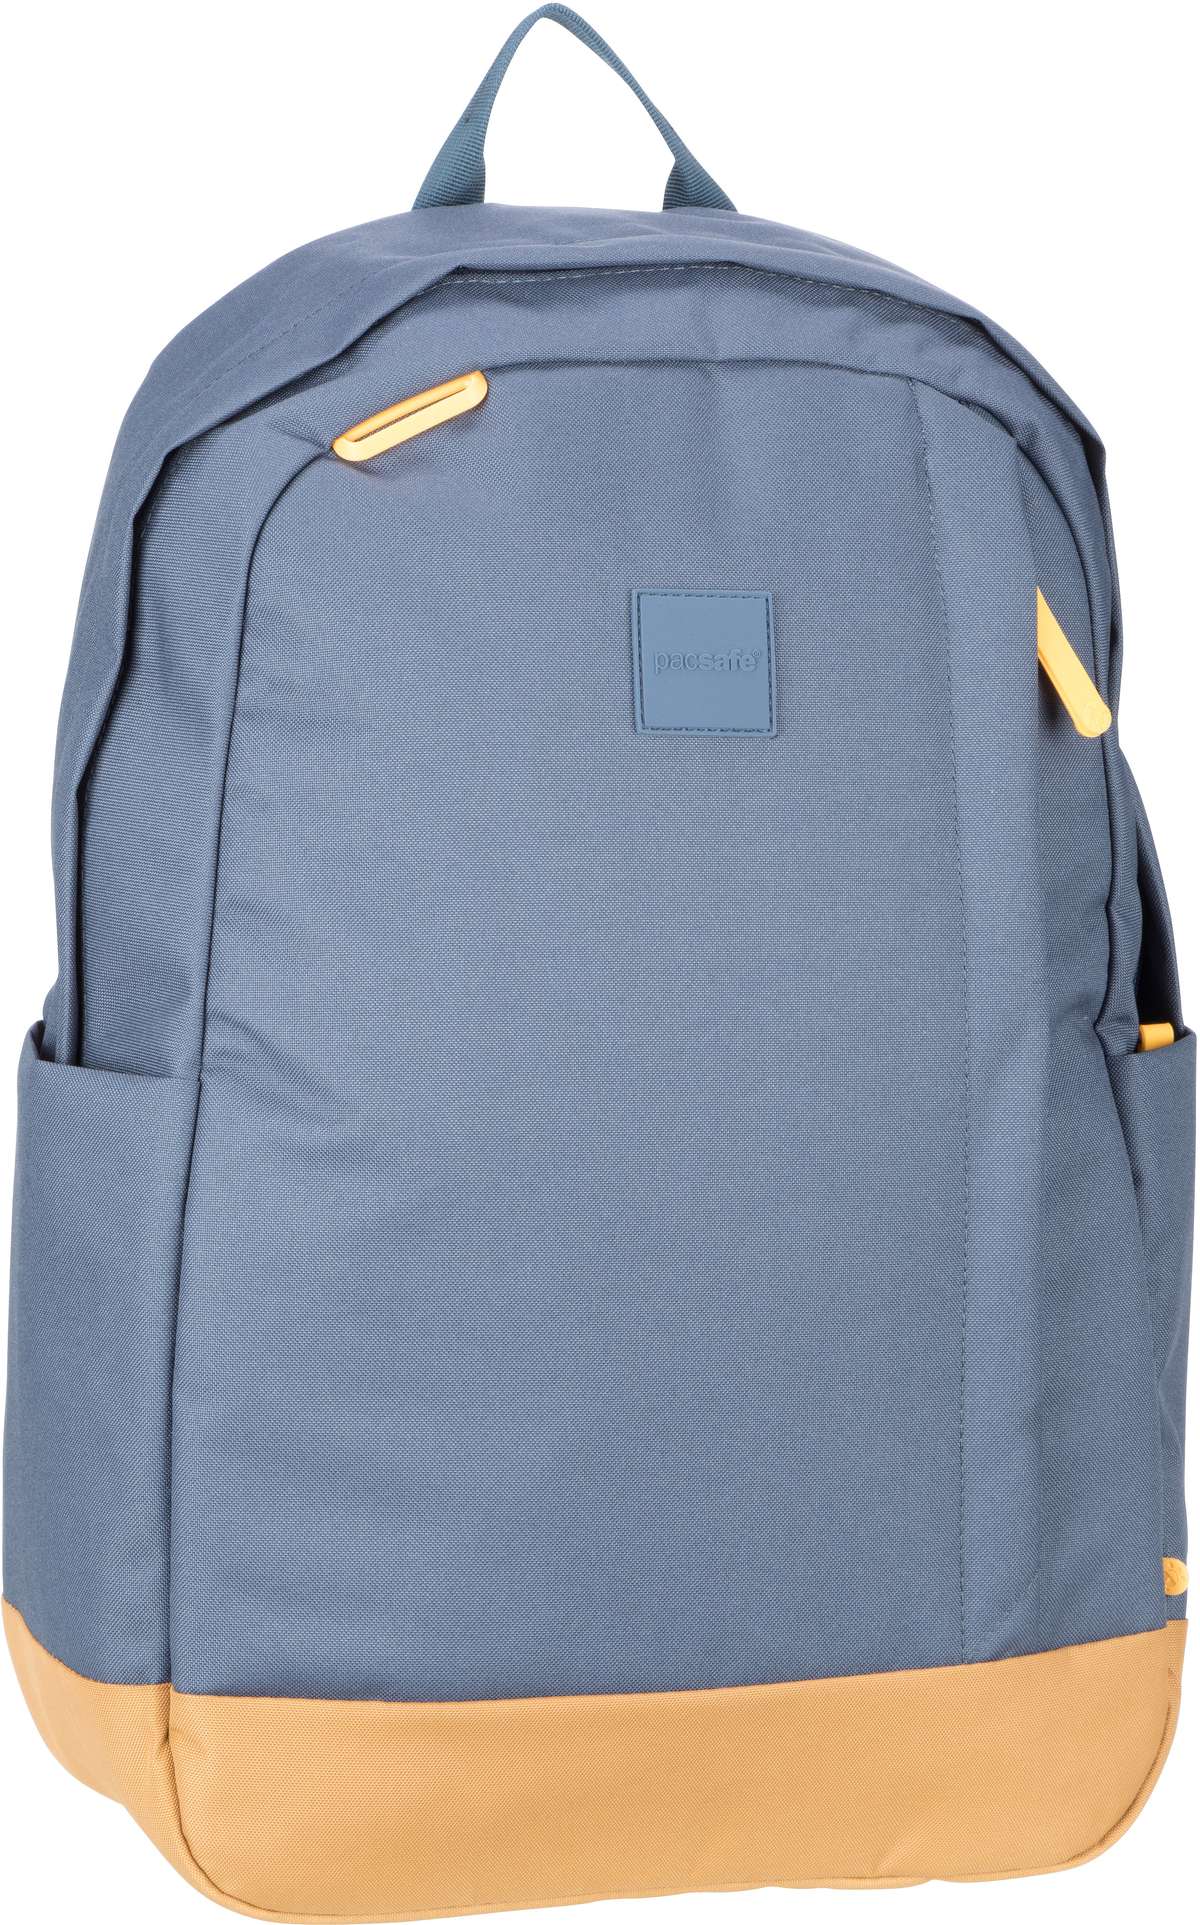 Pacsafe GO 25L Backpack  in Blau (25 Liter), Rucksack / Backpack von Pacsafe